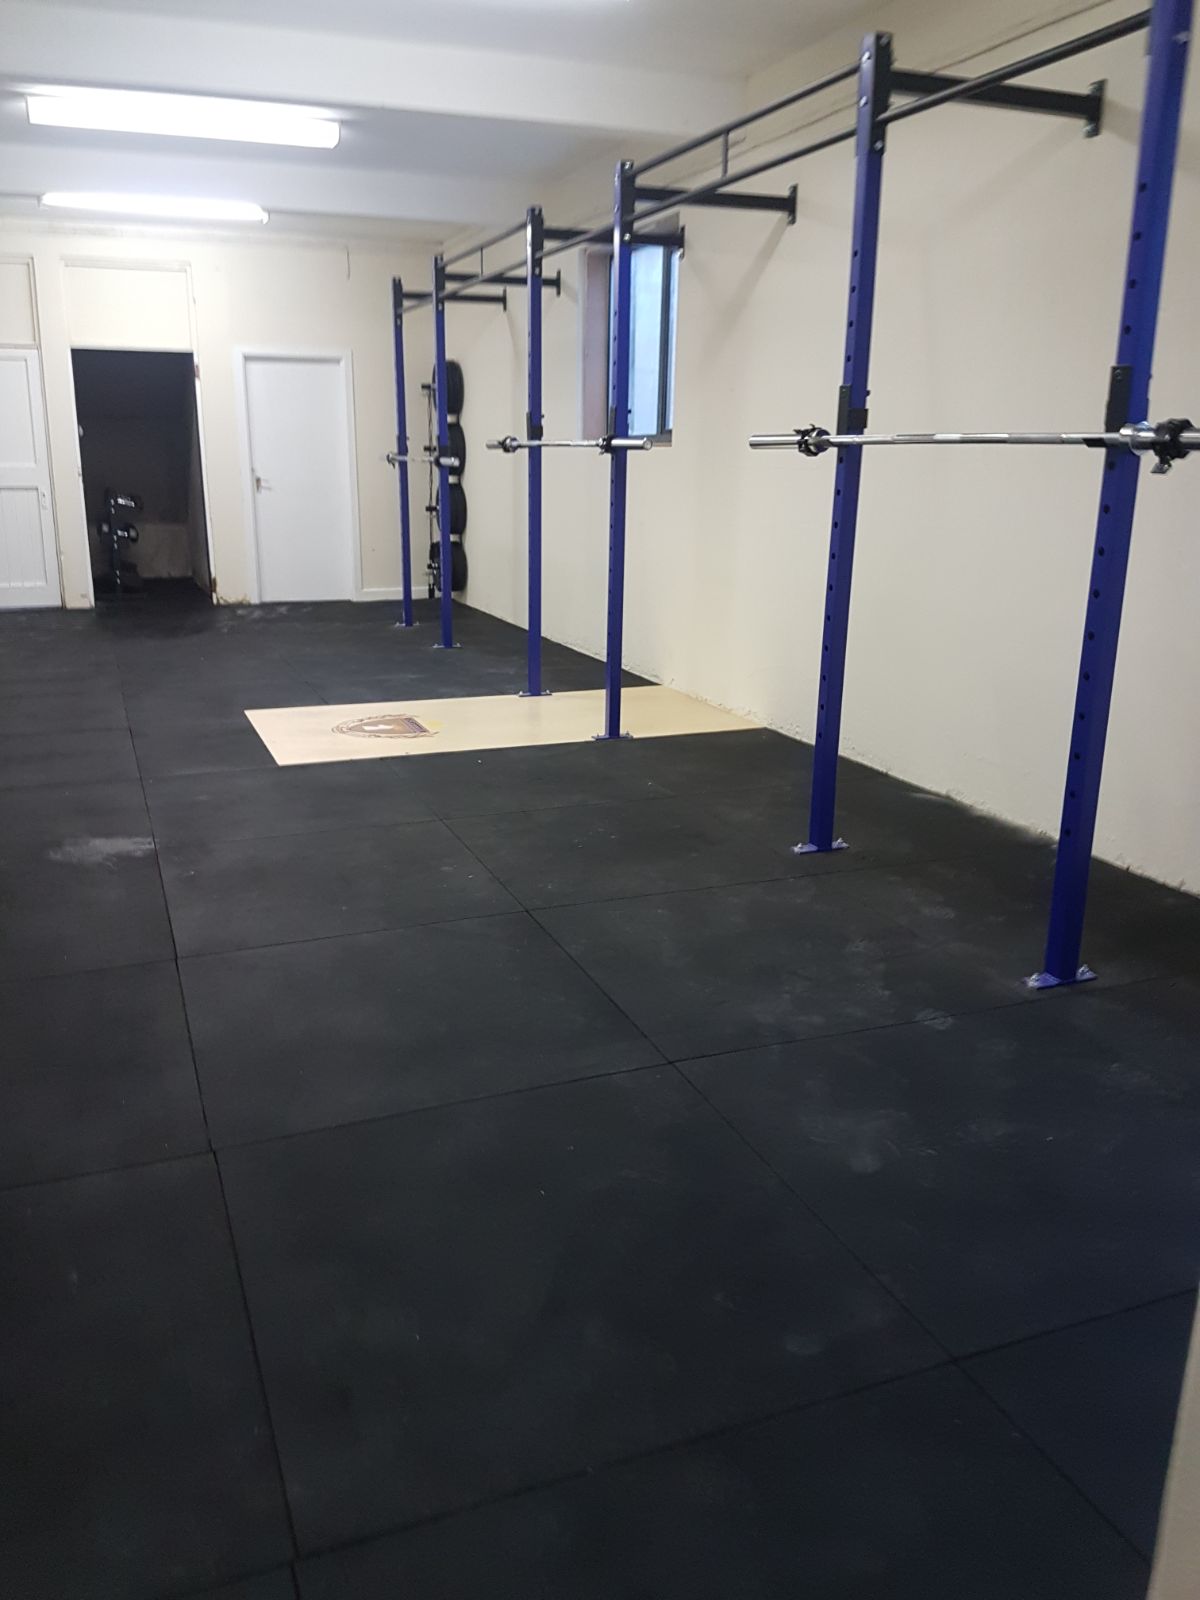 Crossfit Flooring Fitness Equipment Ireland Best For Buying Gym Equipment